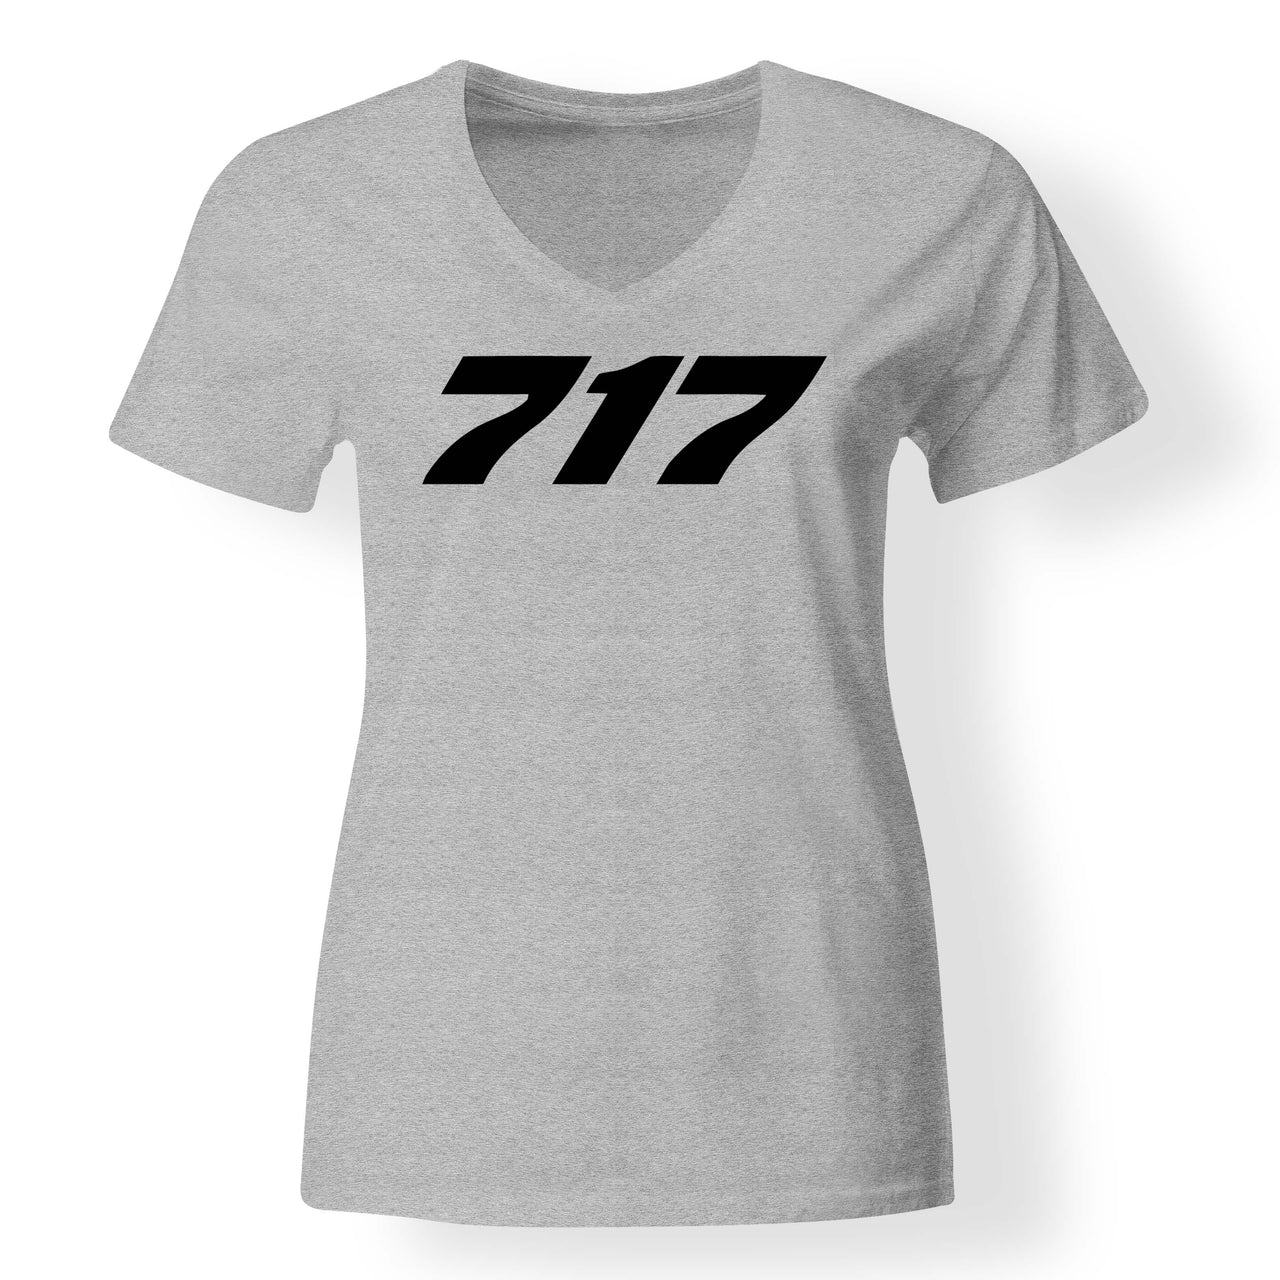 717 Flat Text Designed V-Neck T-Shirts